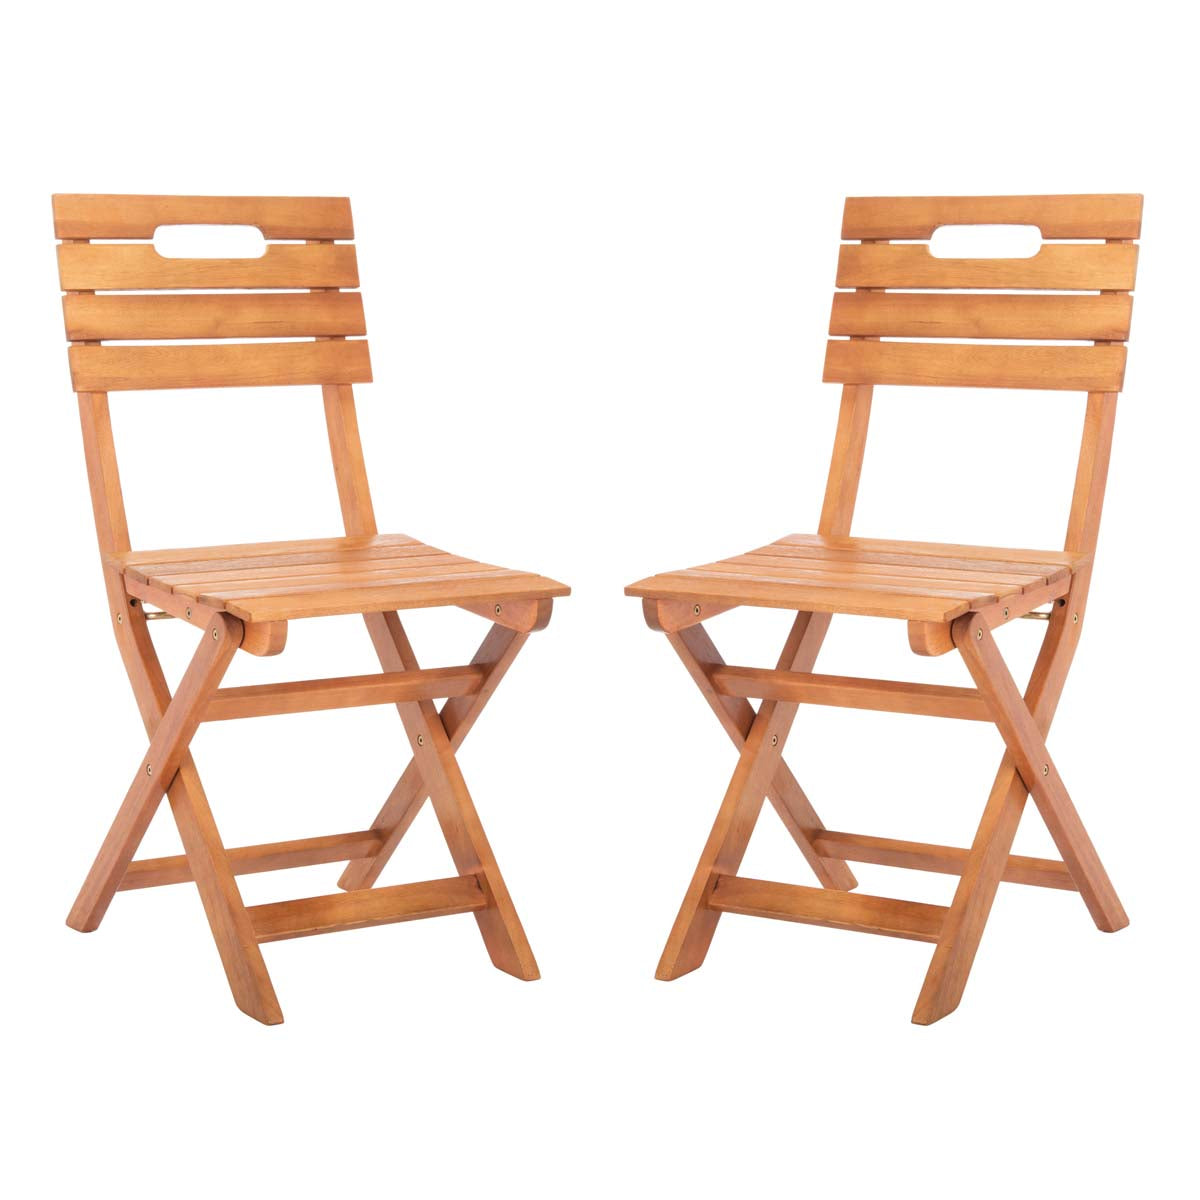 Safavieh Blison Folding Chairs , PAT7057